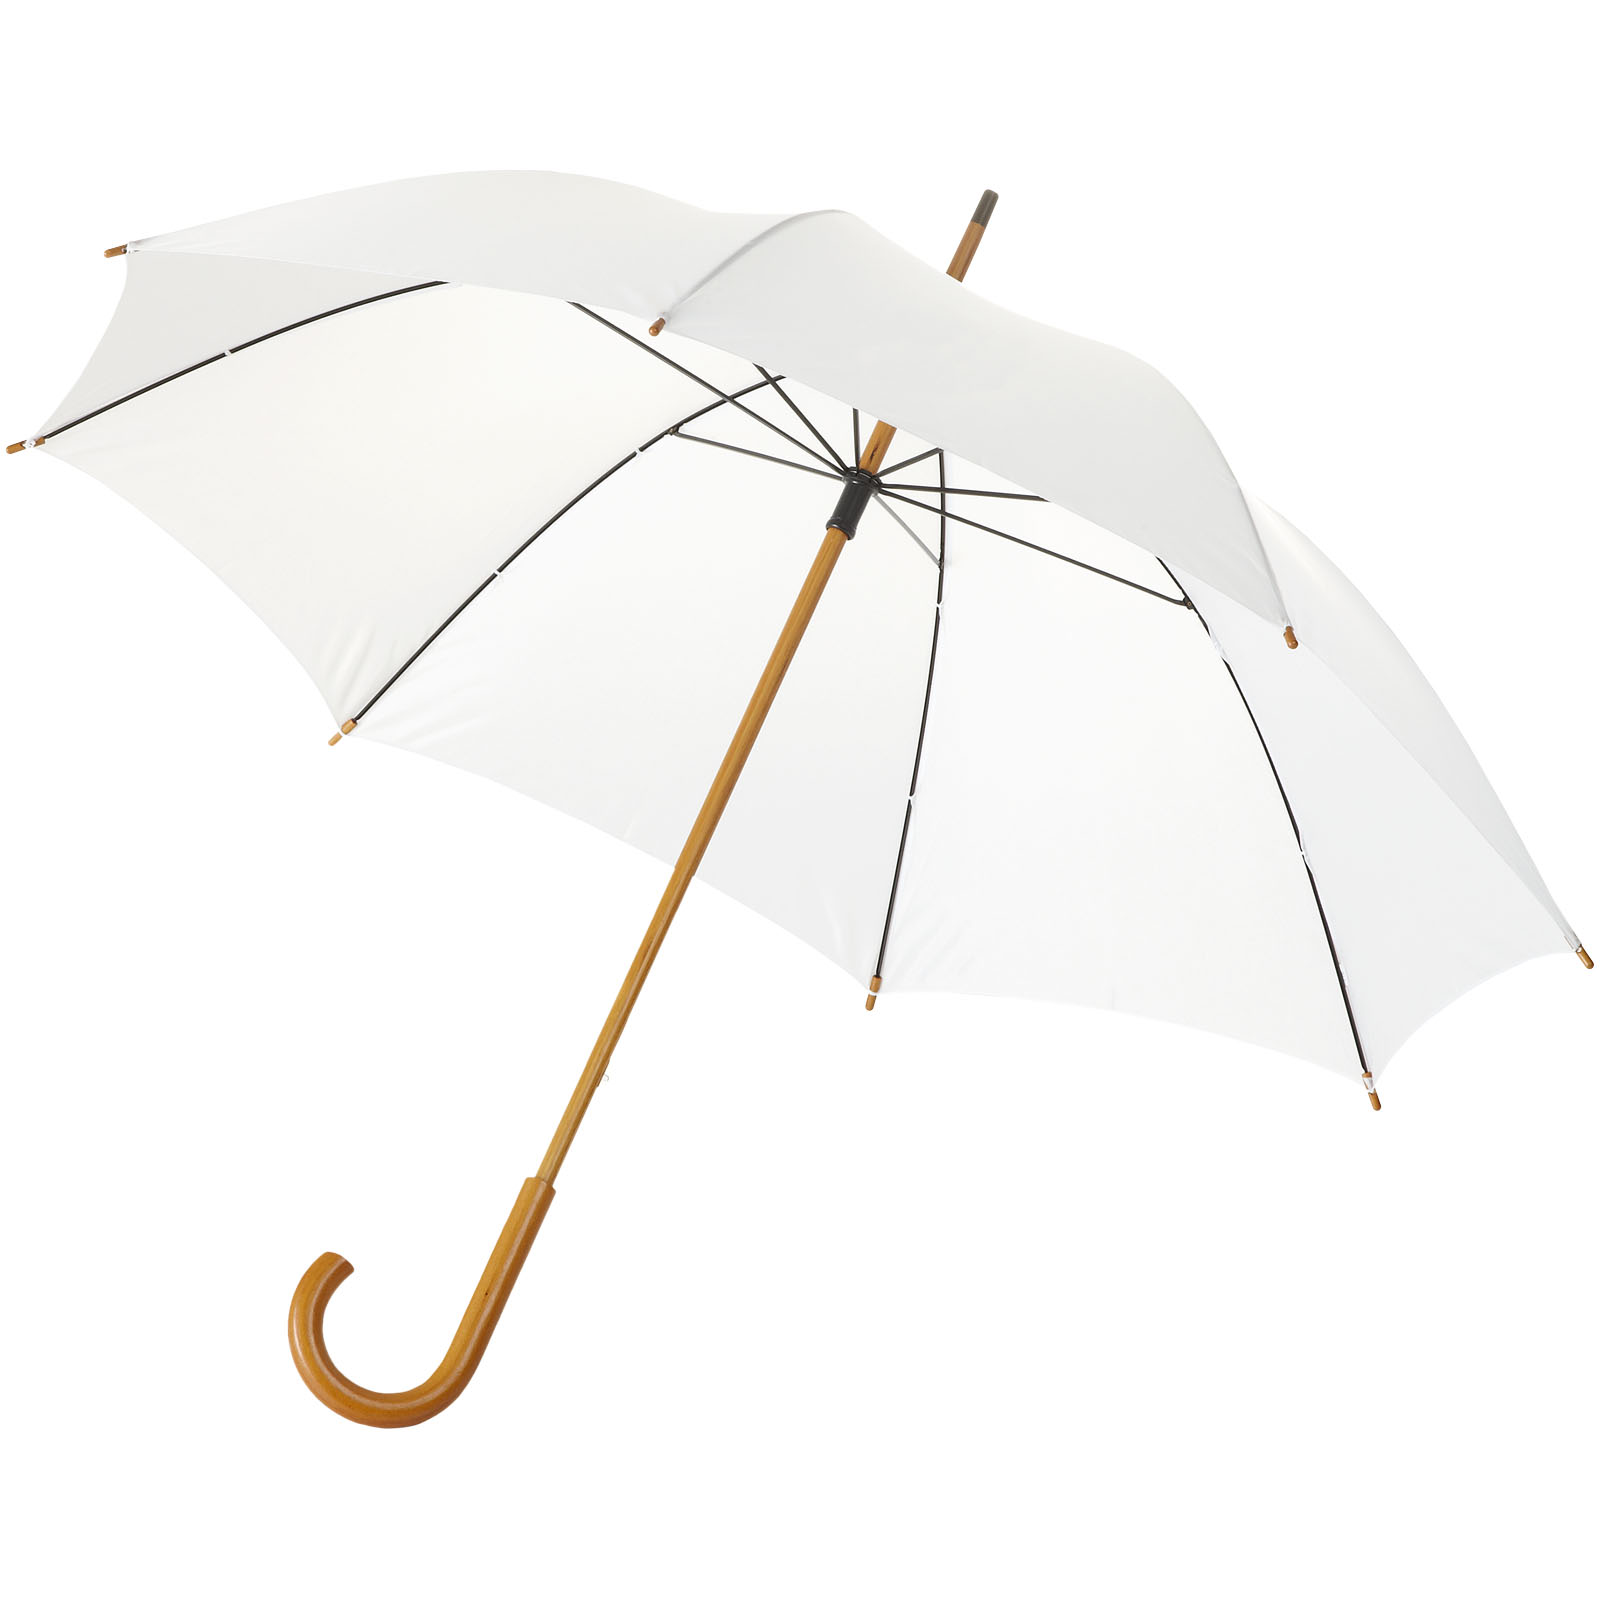 Jova 23" umbrella with wooden shaft and handle (10906800)